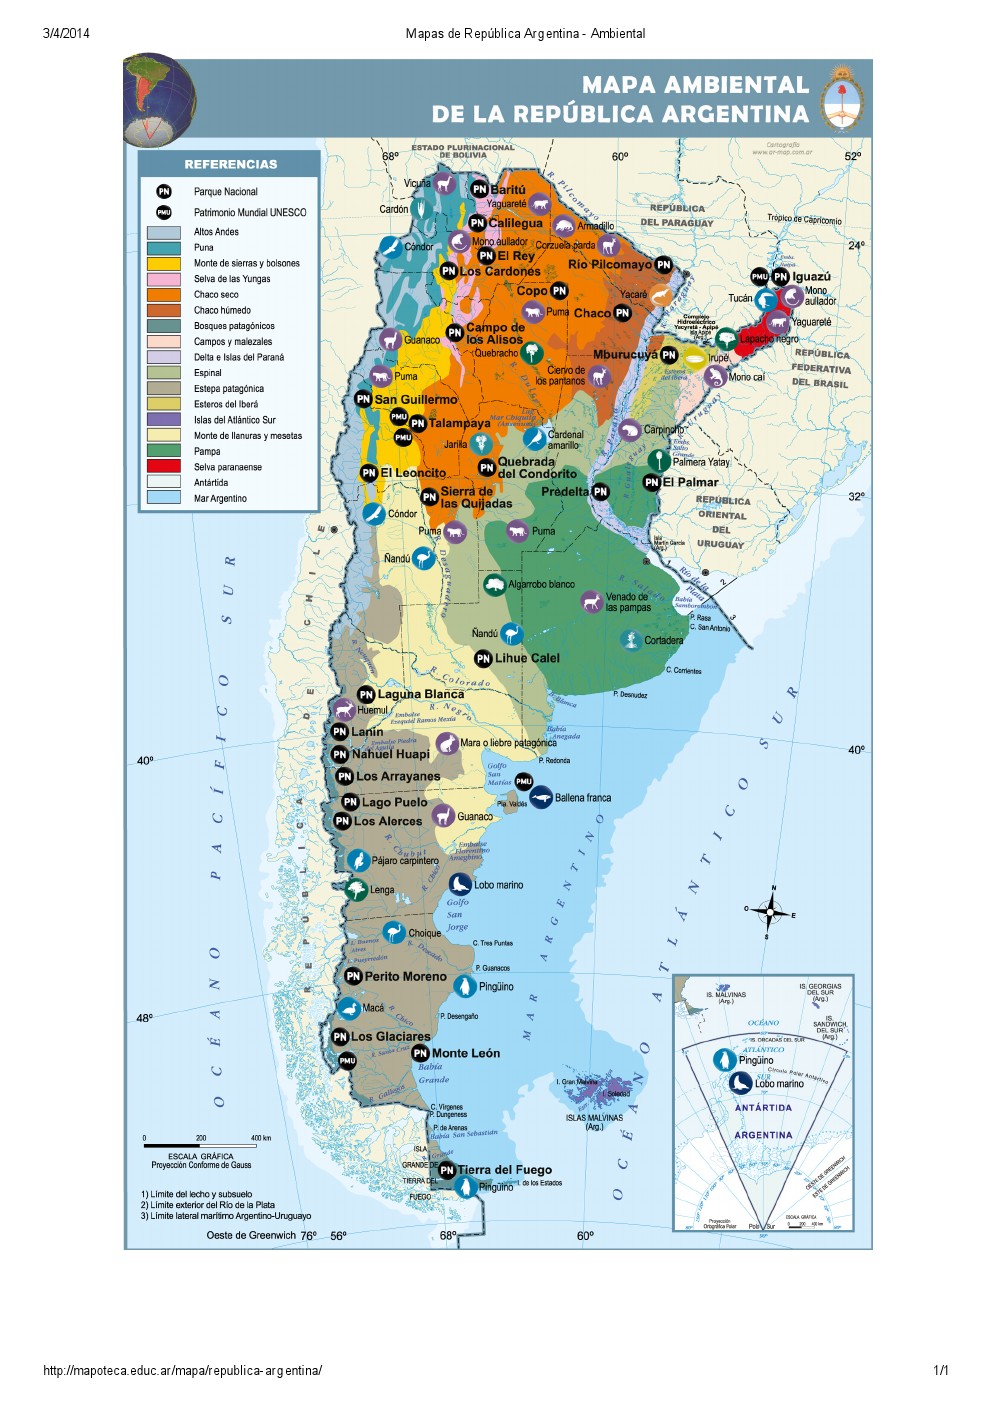 Mapa ambiental de Argentina. Mapoteca de Educ.ar